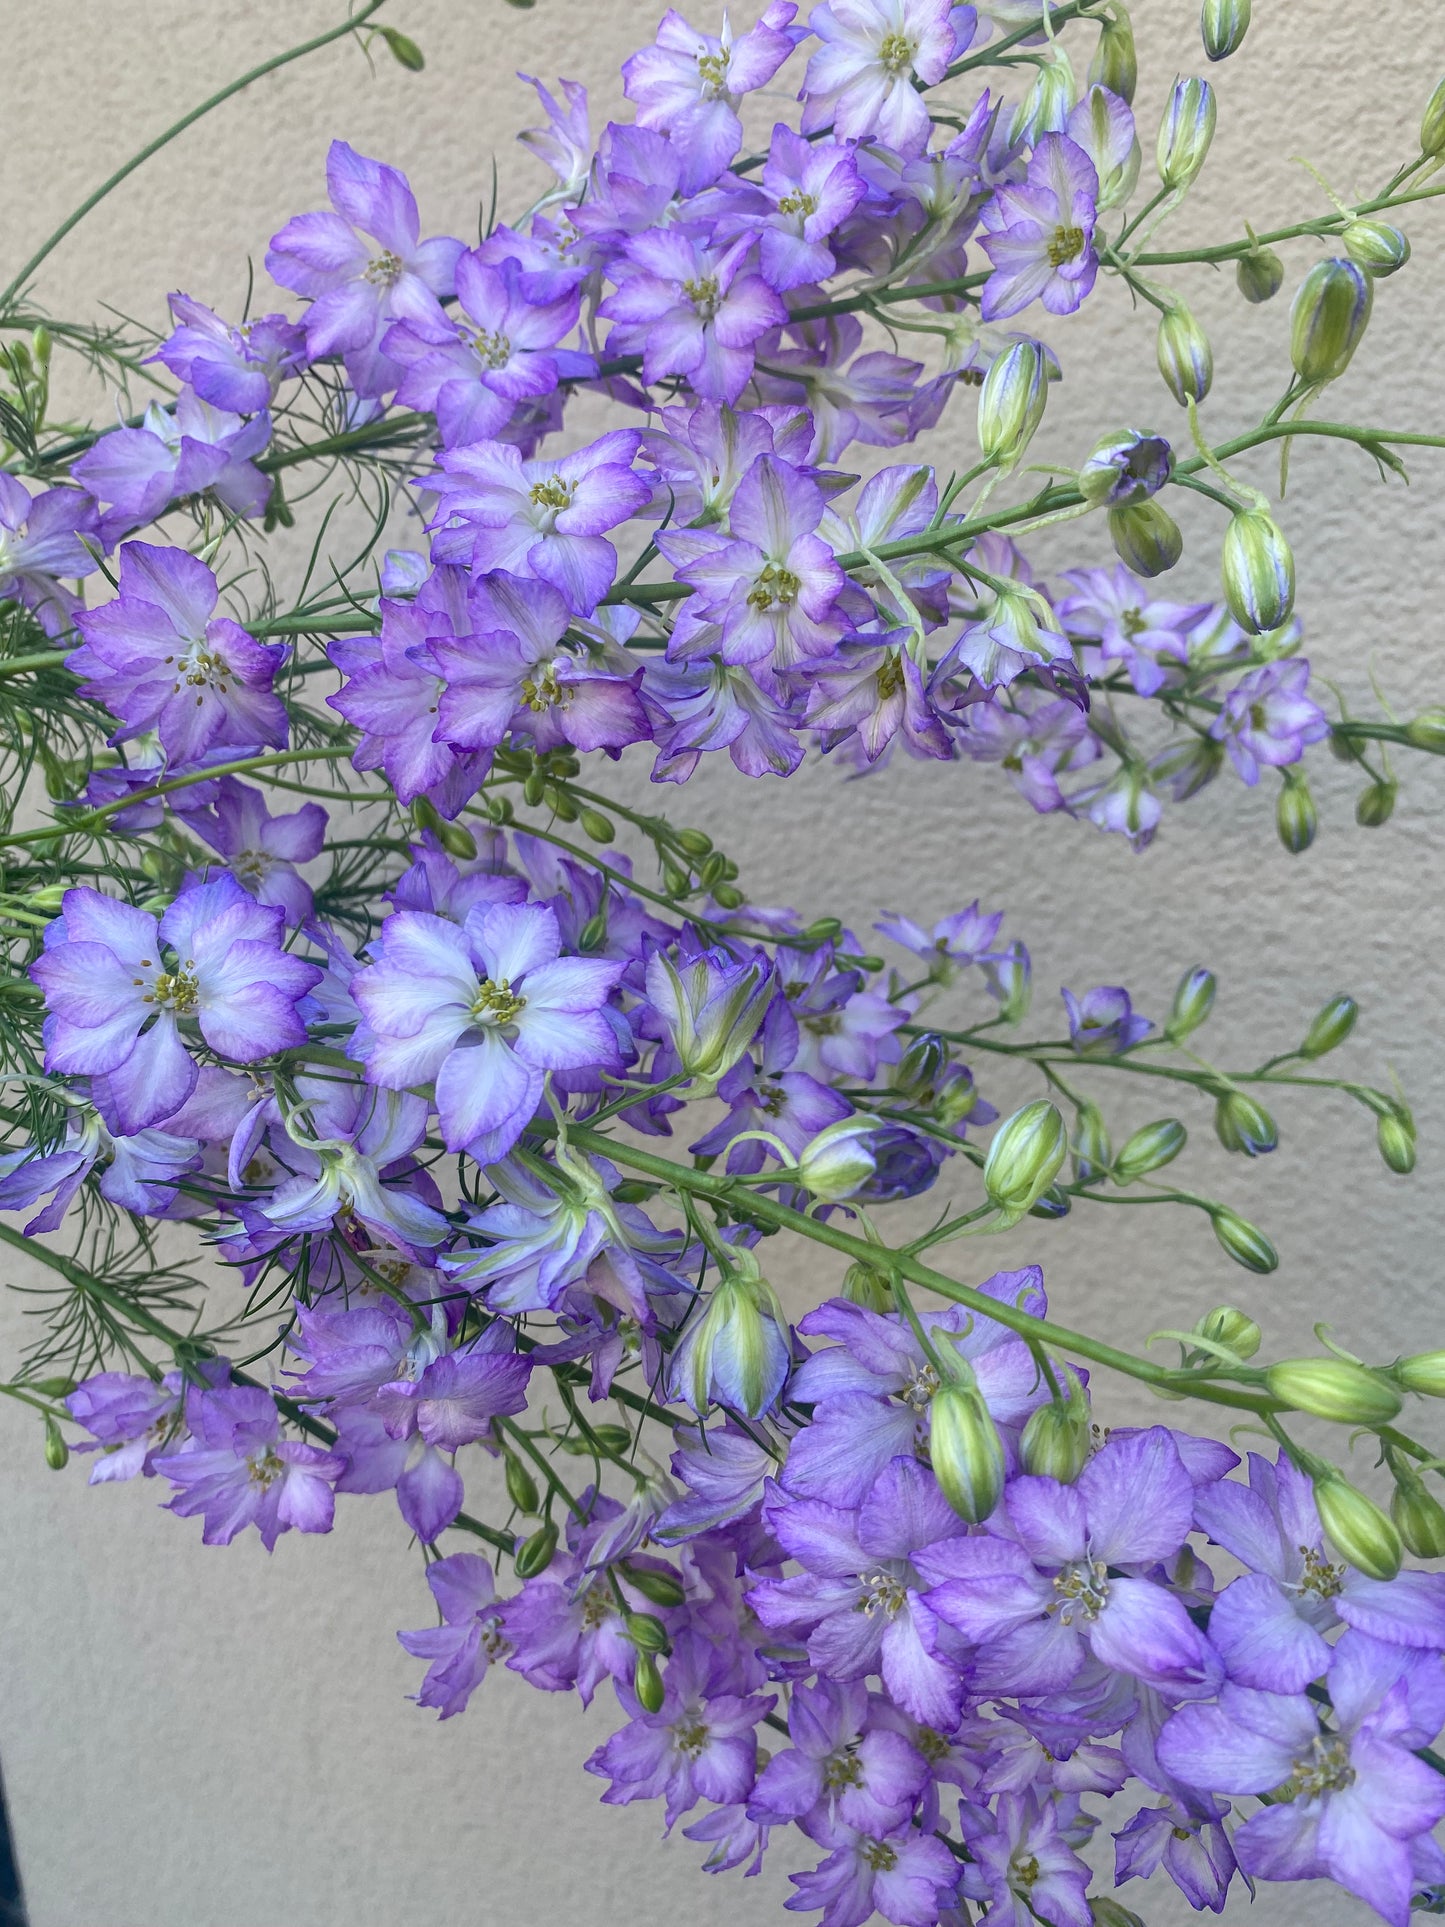 Delphinium Consolida Fancy Purple Picotee (larkspur)